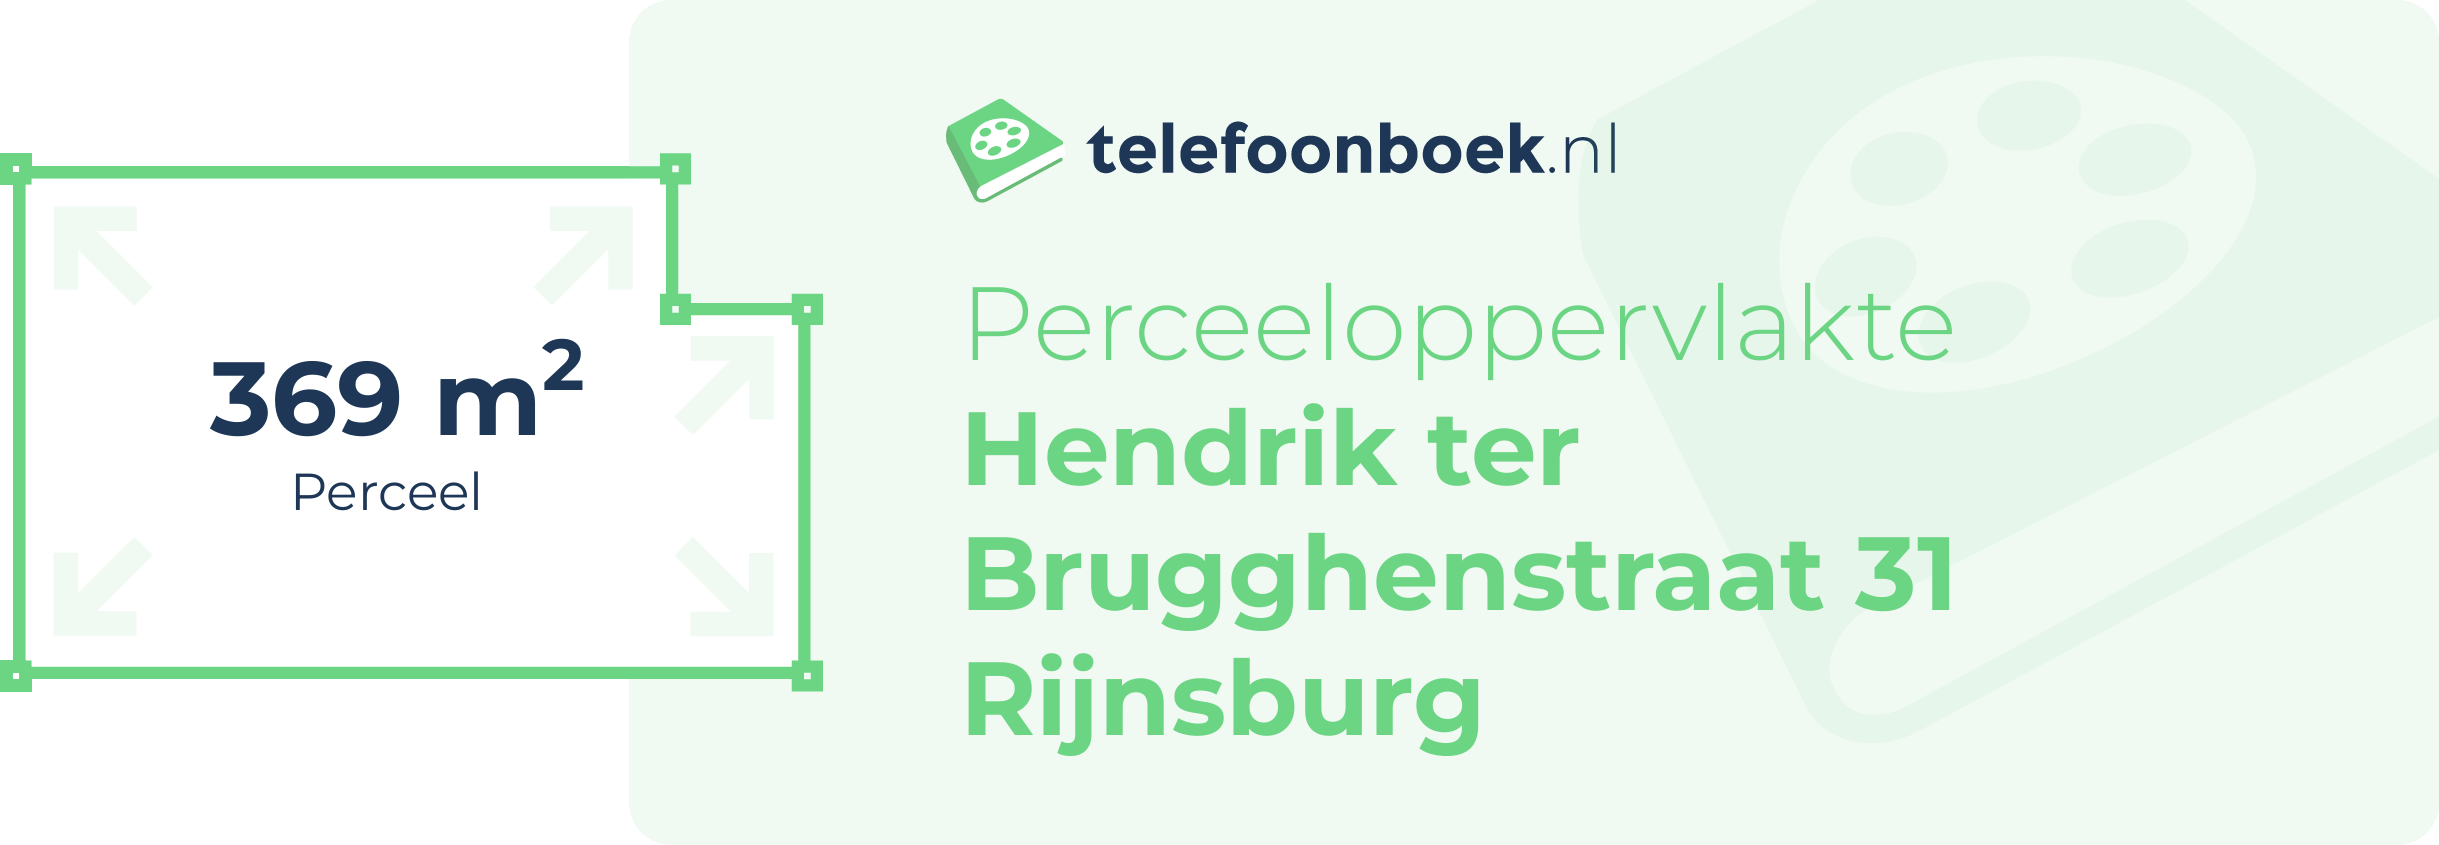 Perceeloppervlakte Hendrik Ter Brugghenstraat 31 Rijnsburg